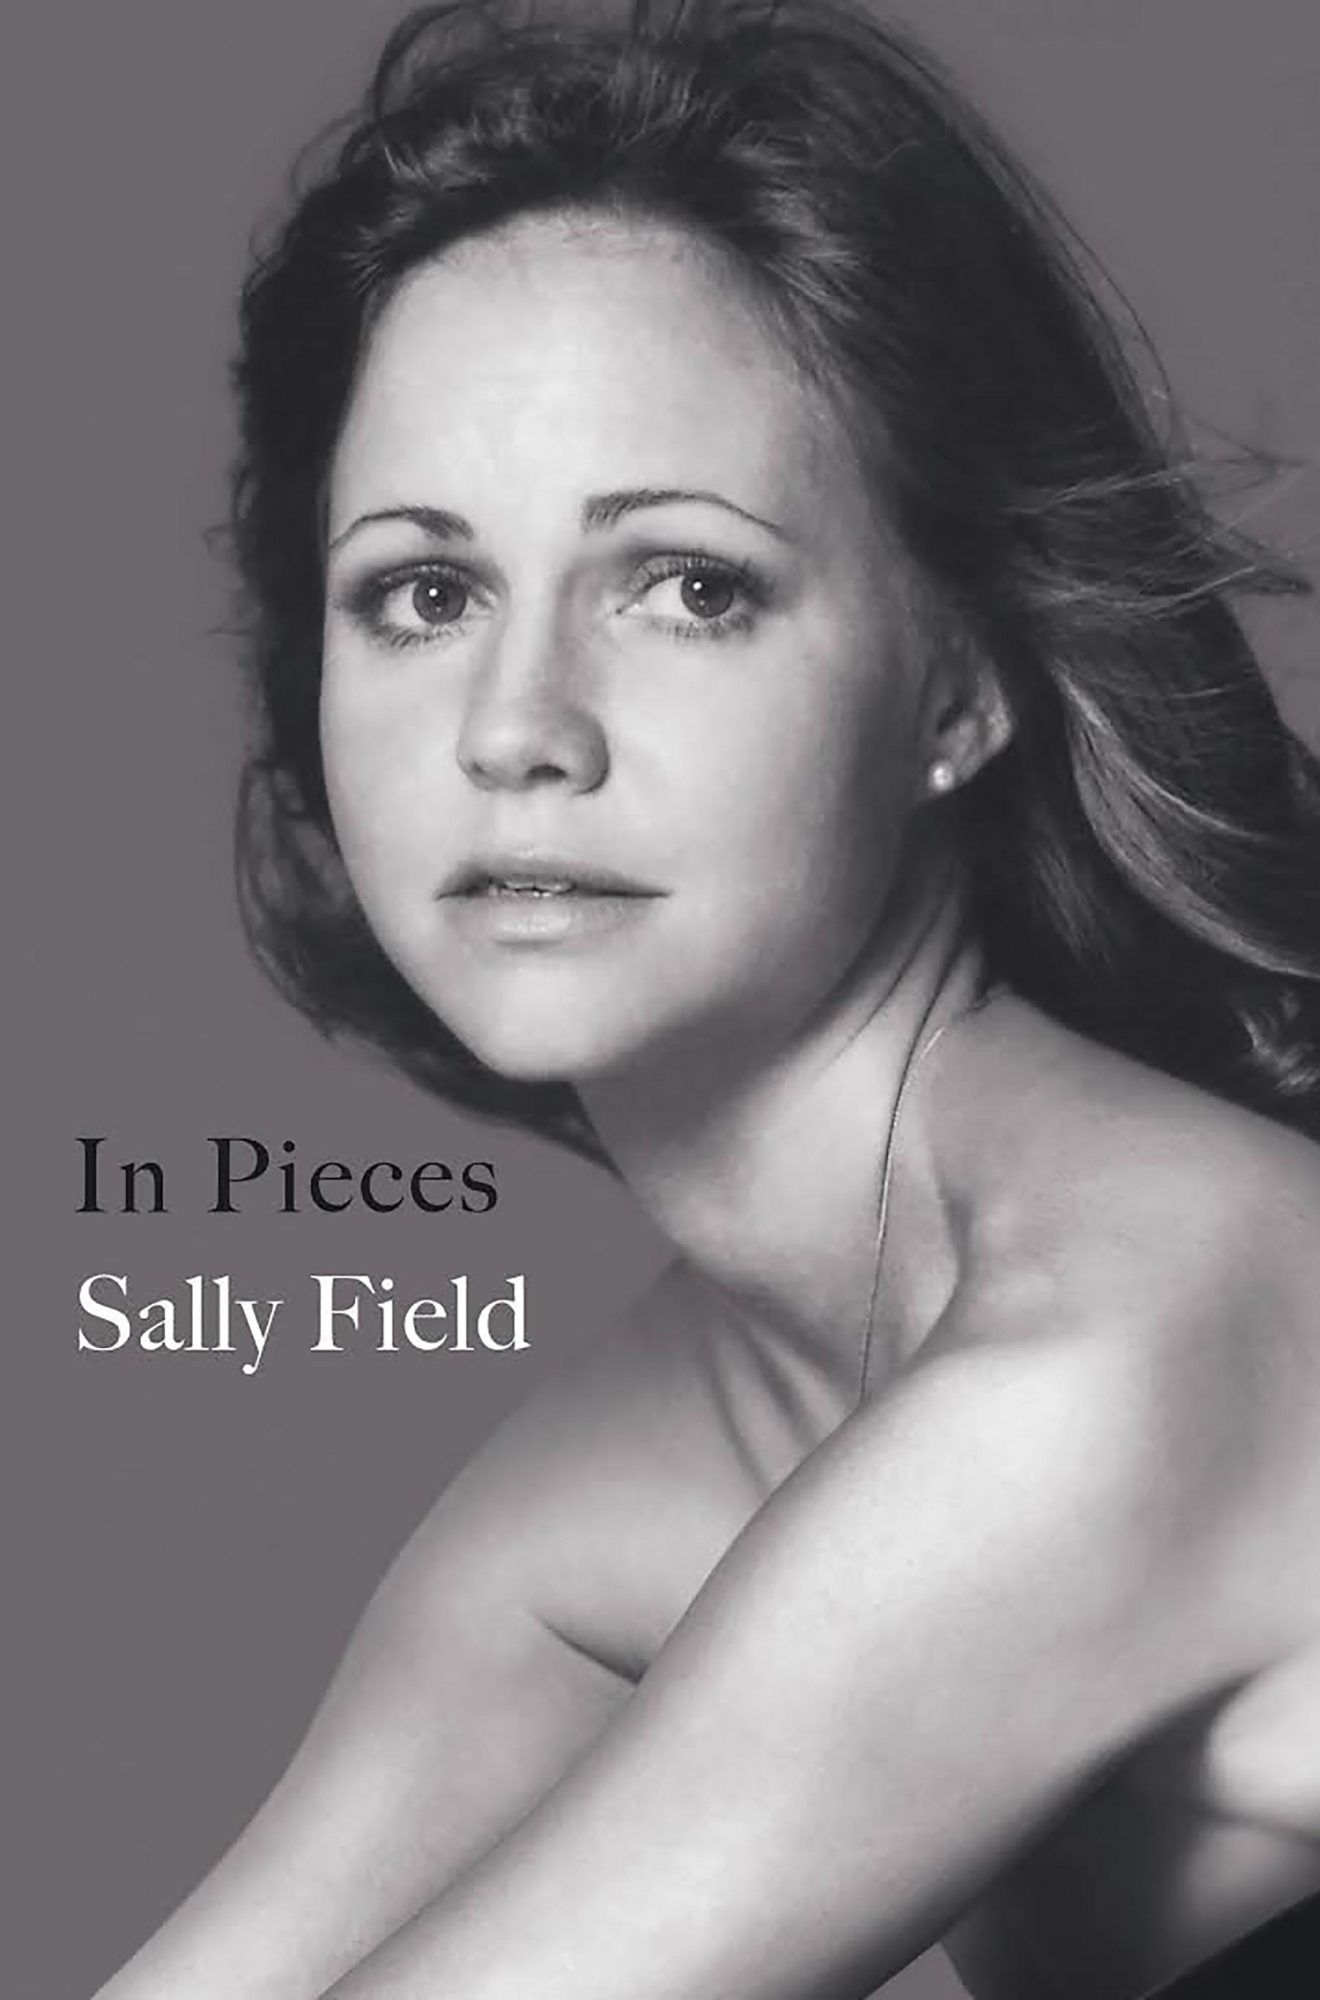 Sally field hot pics